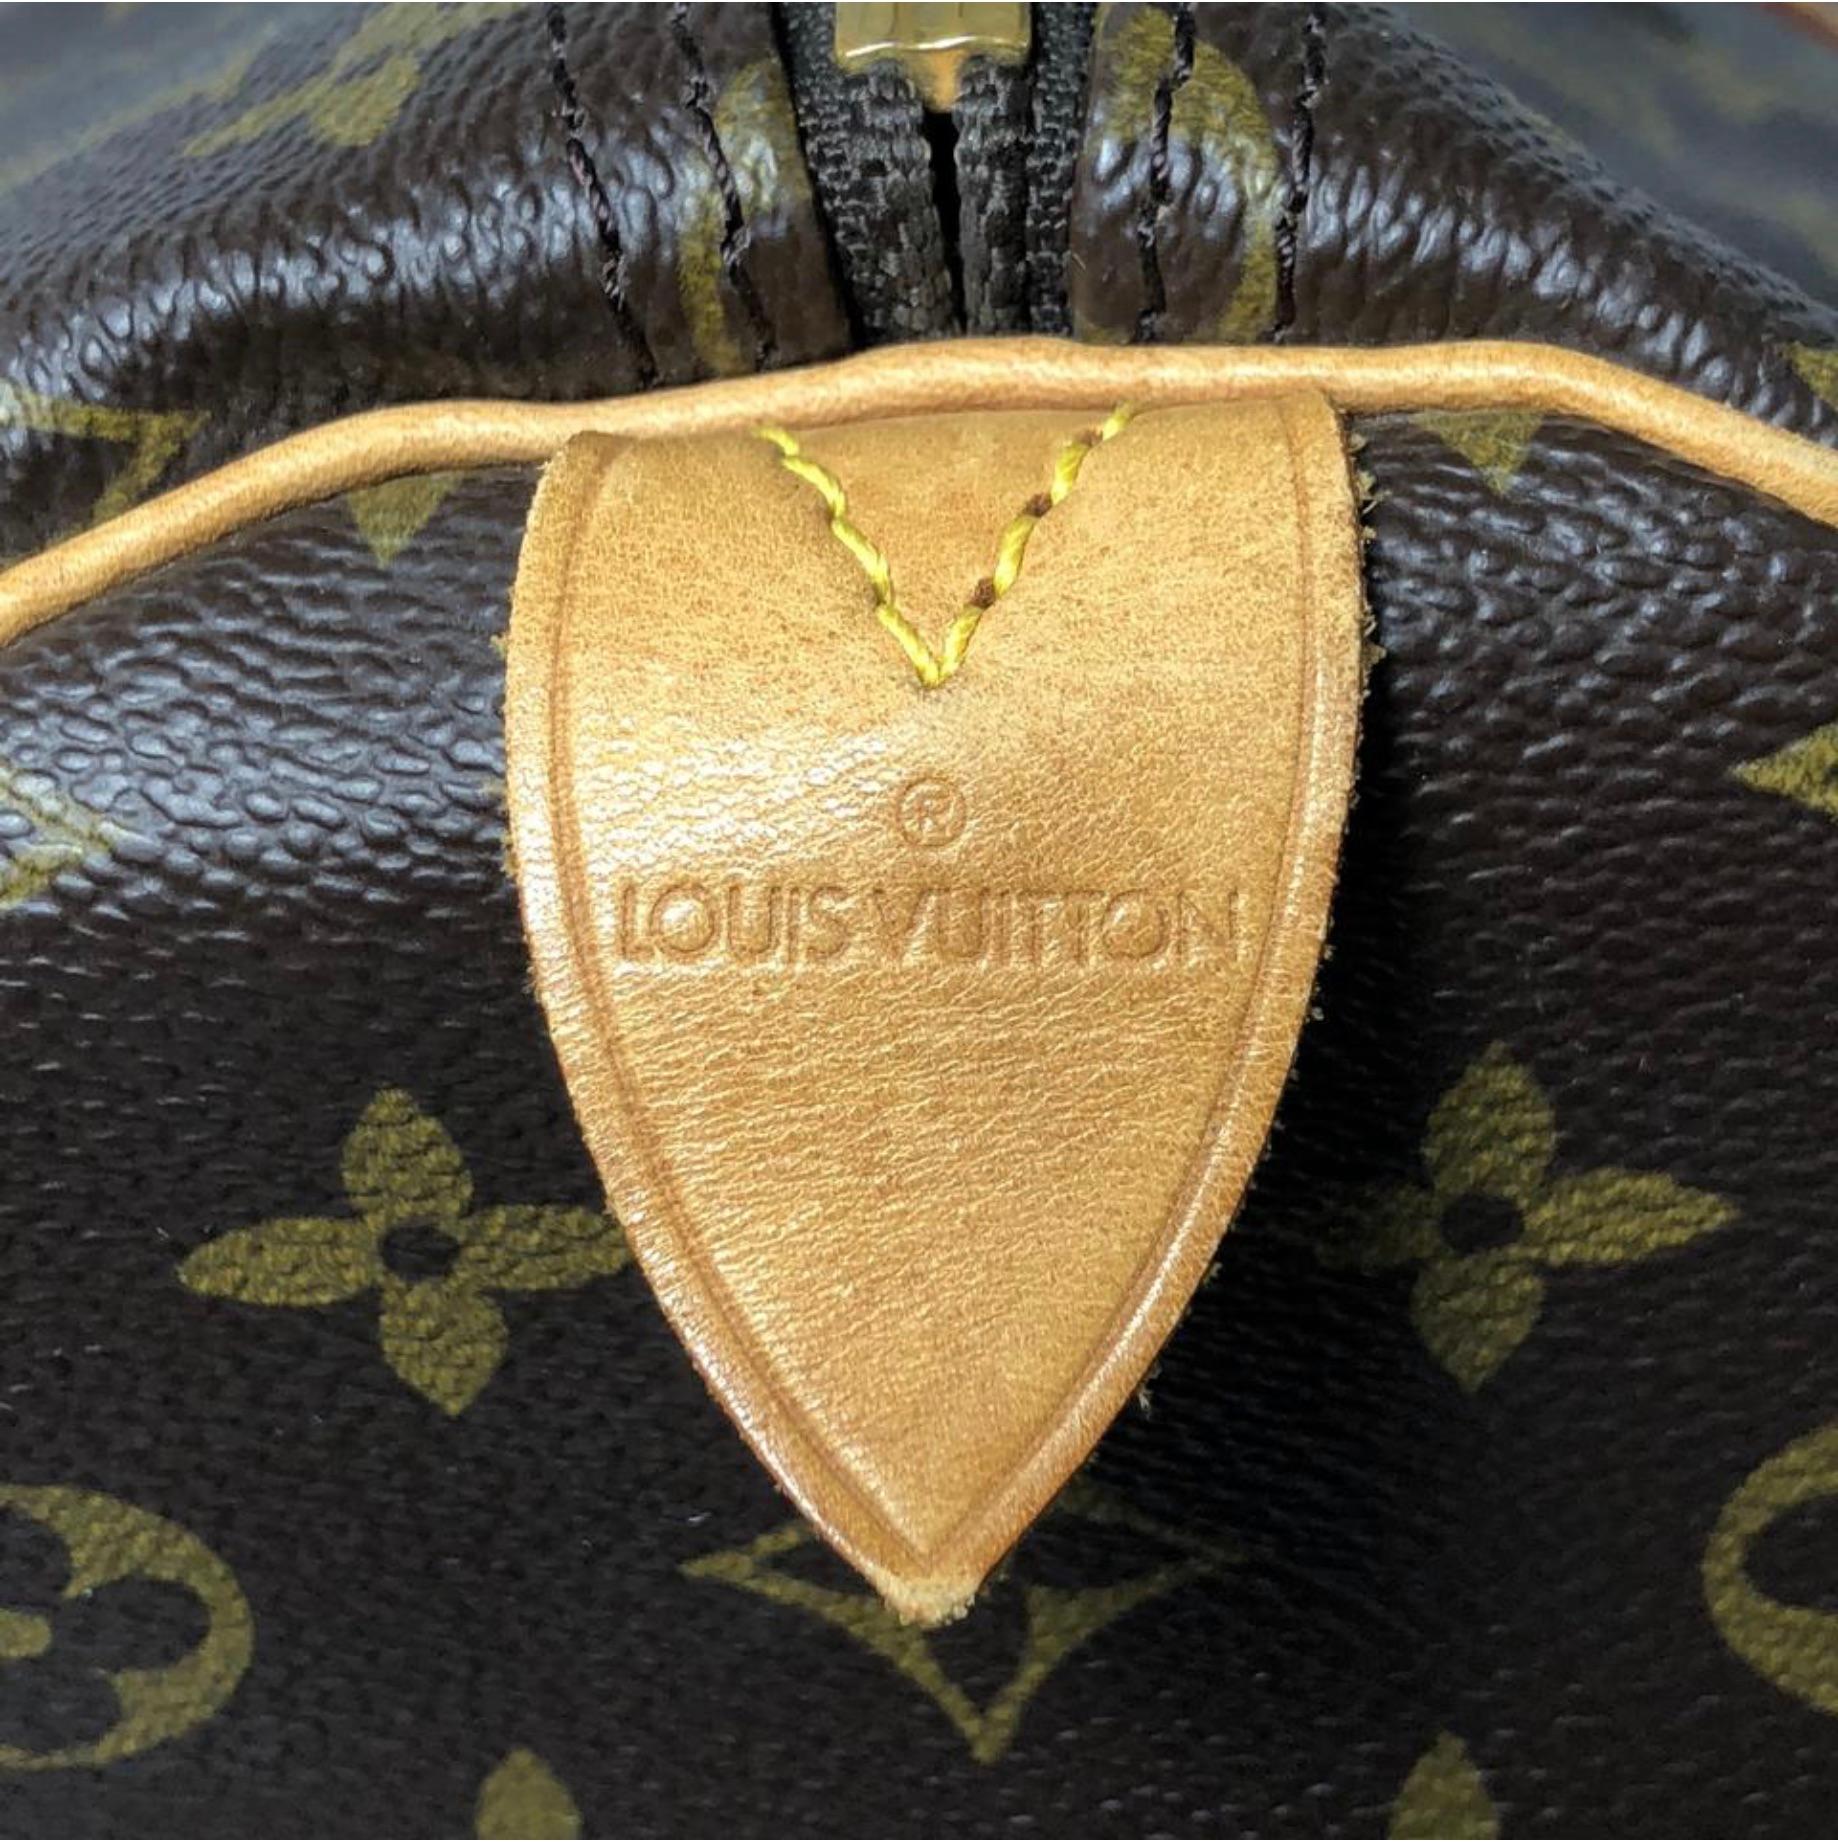 Louis Vuitton Monogram Keepall 55 Travel Handbag For Sale 5